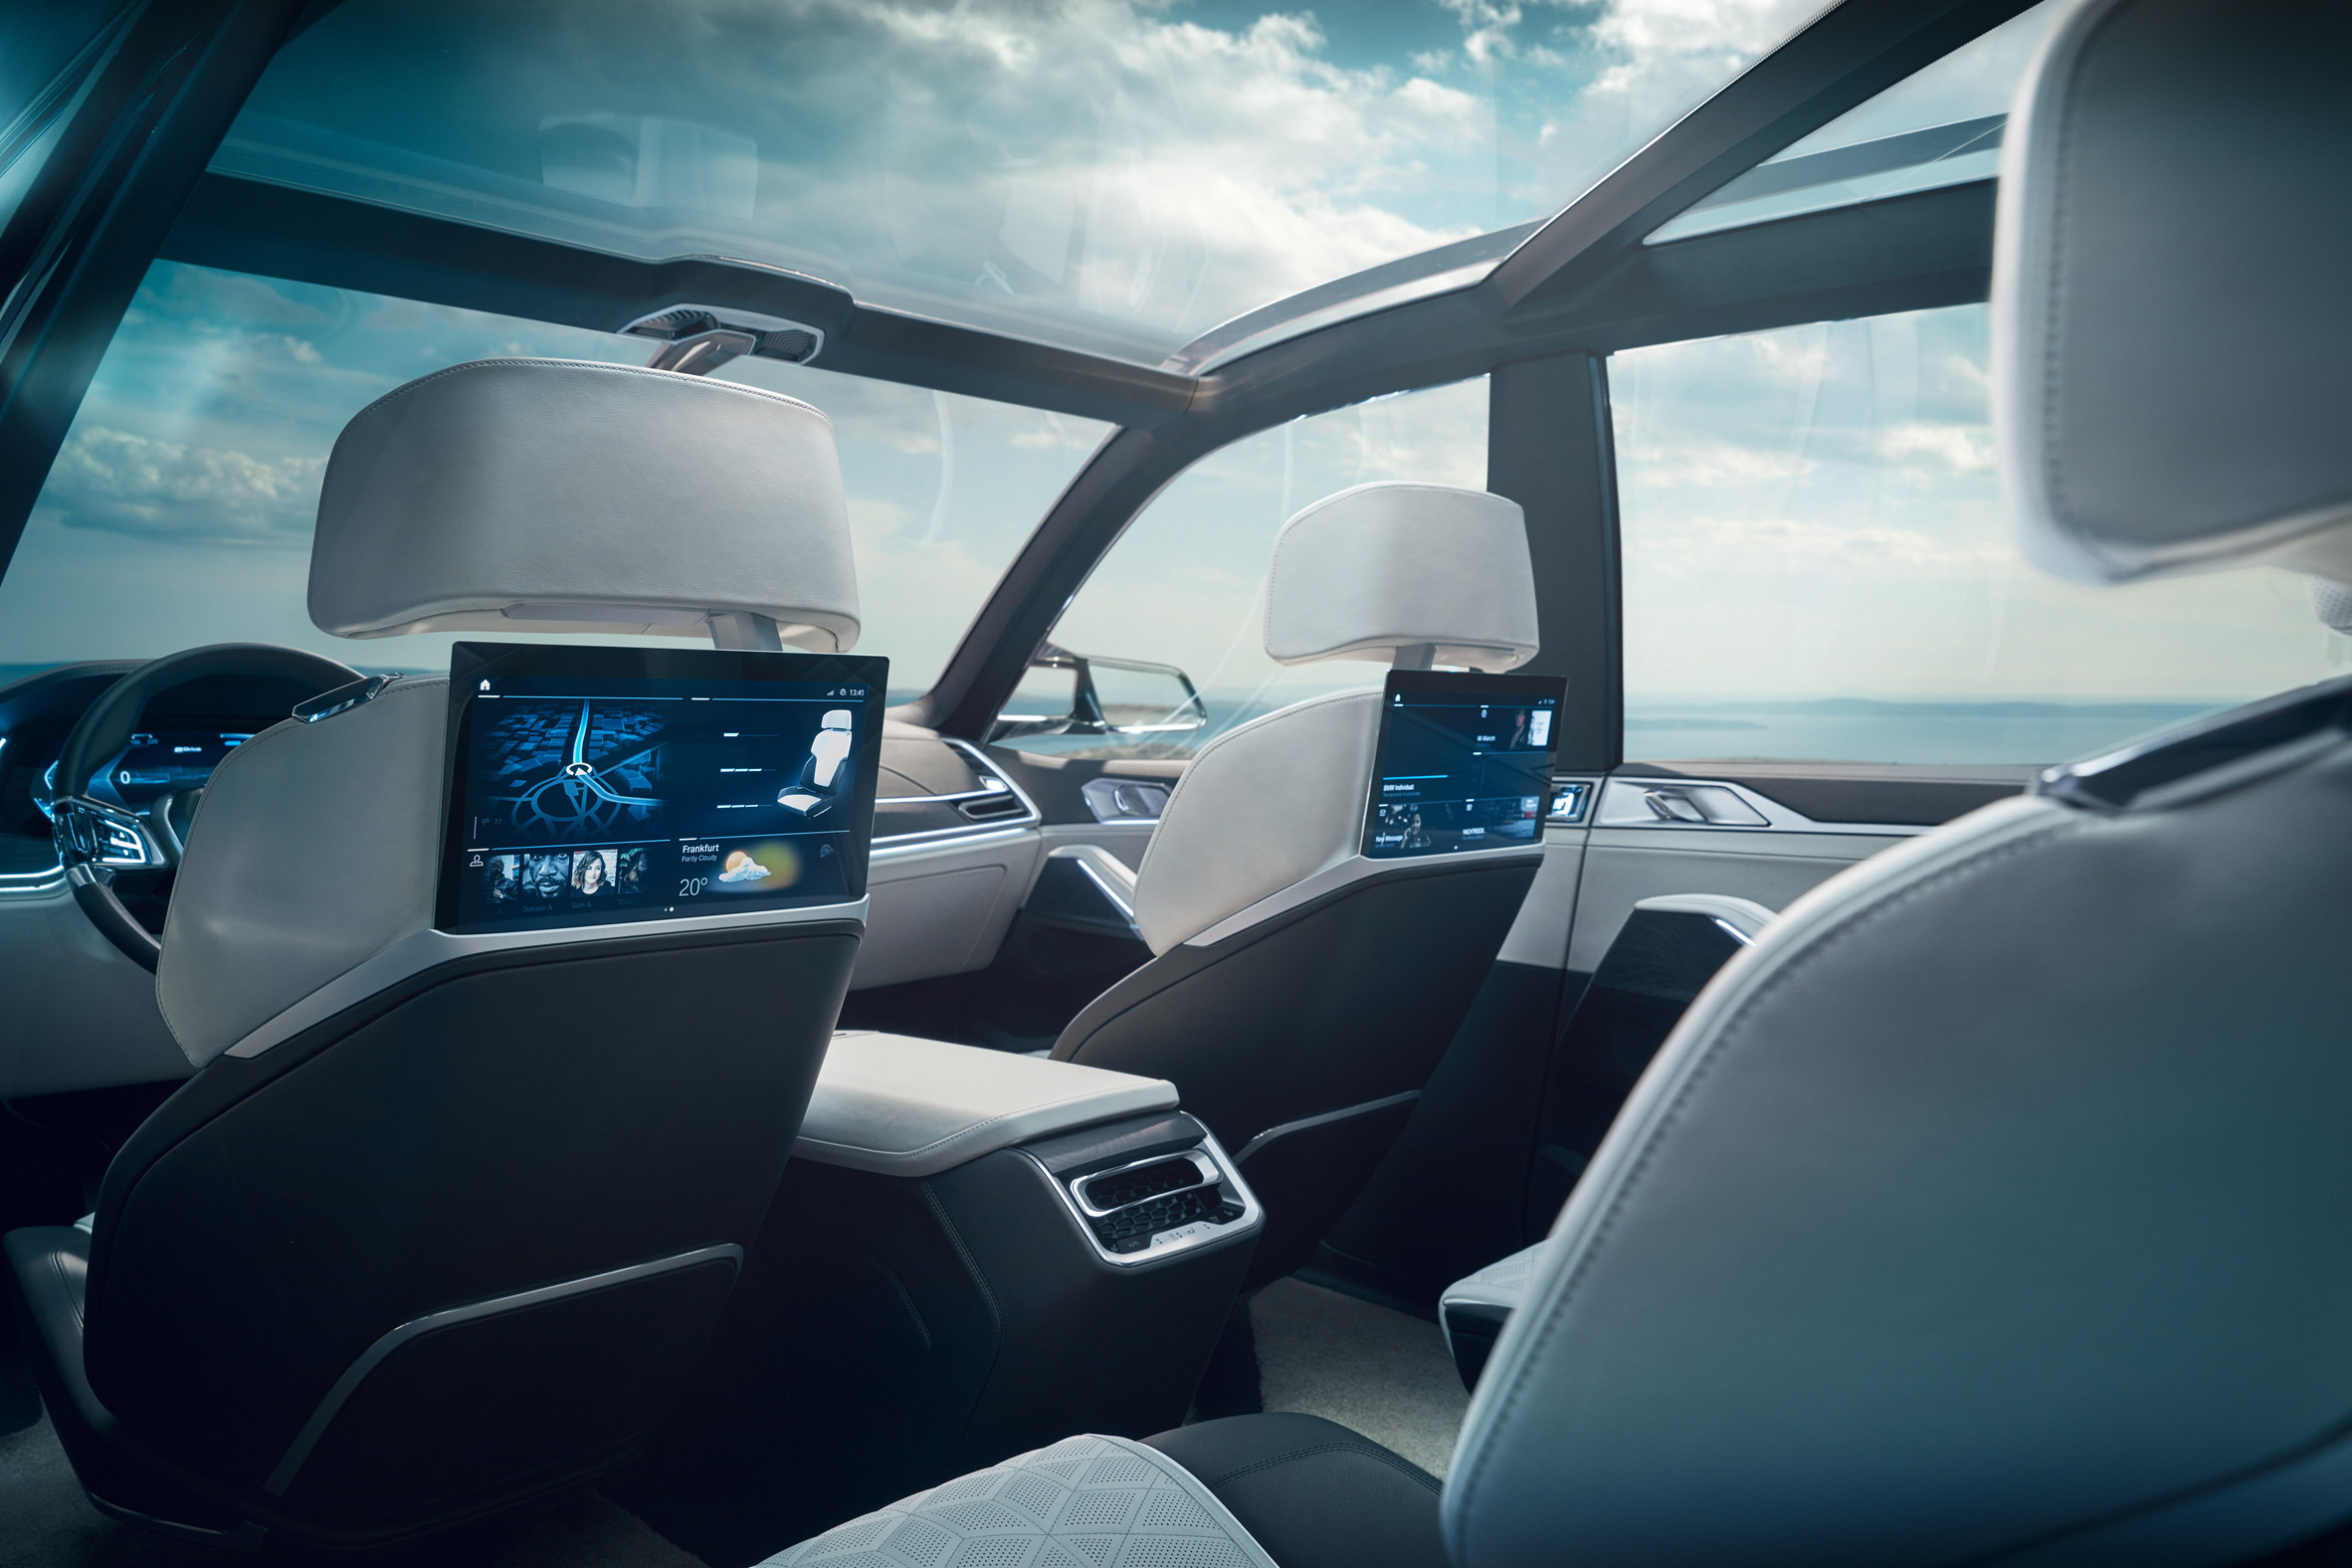 BMW unveils spacious X7 concept car as part of luxury vehicle range-16